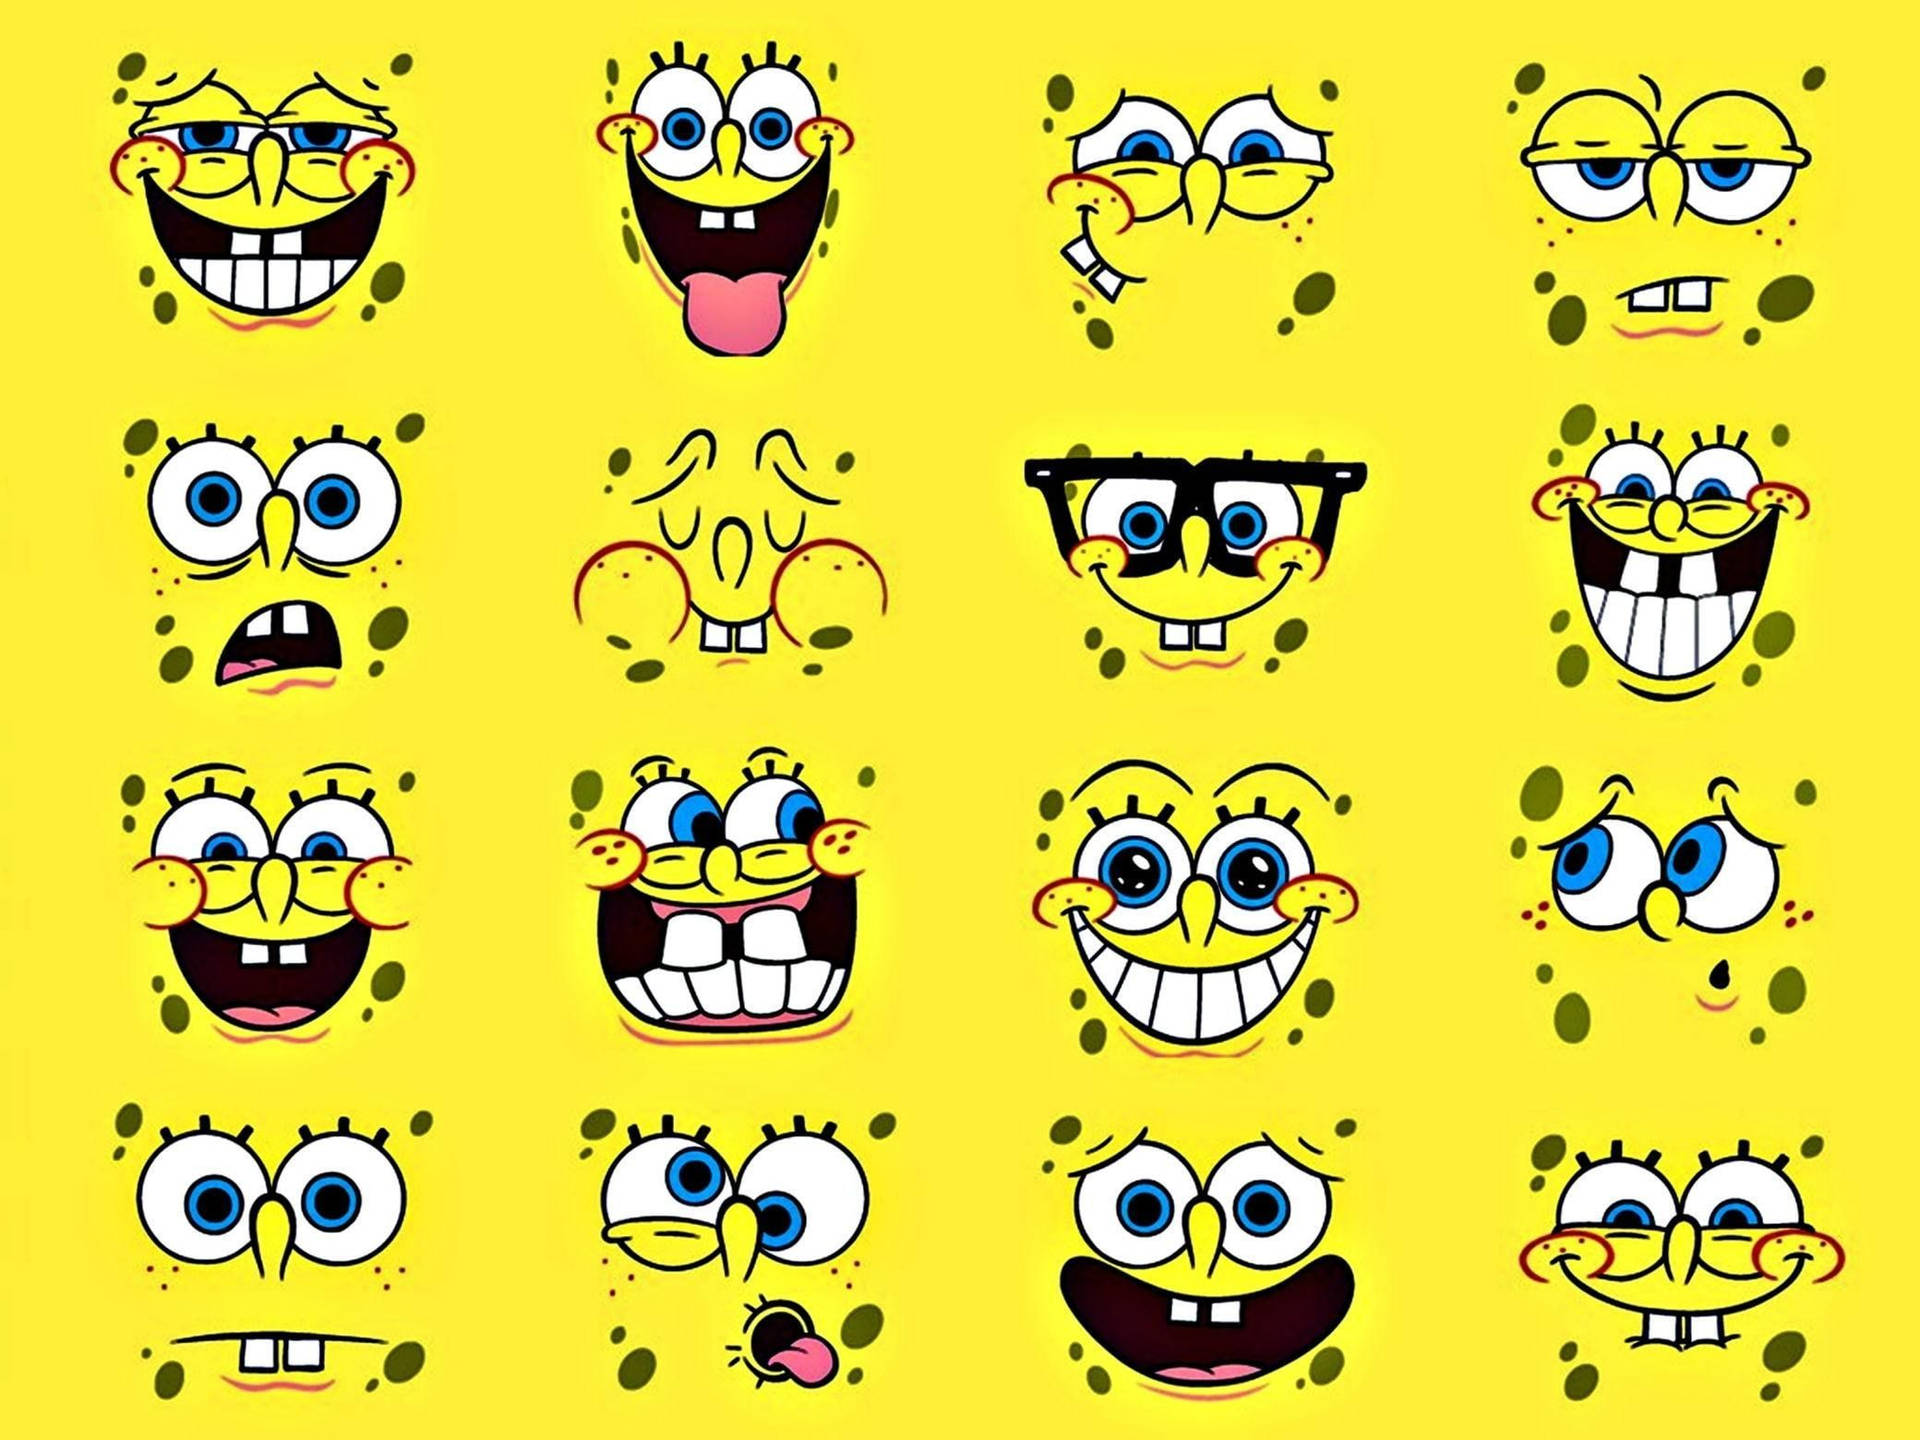 Spongebob 2080X1560 Wallpaper and Background Image